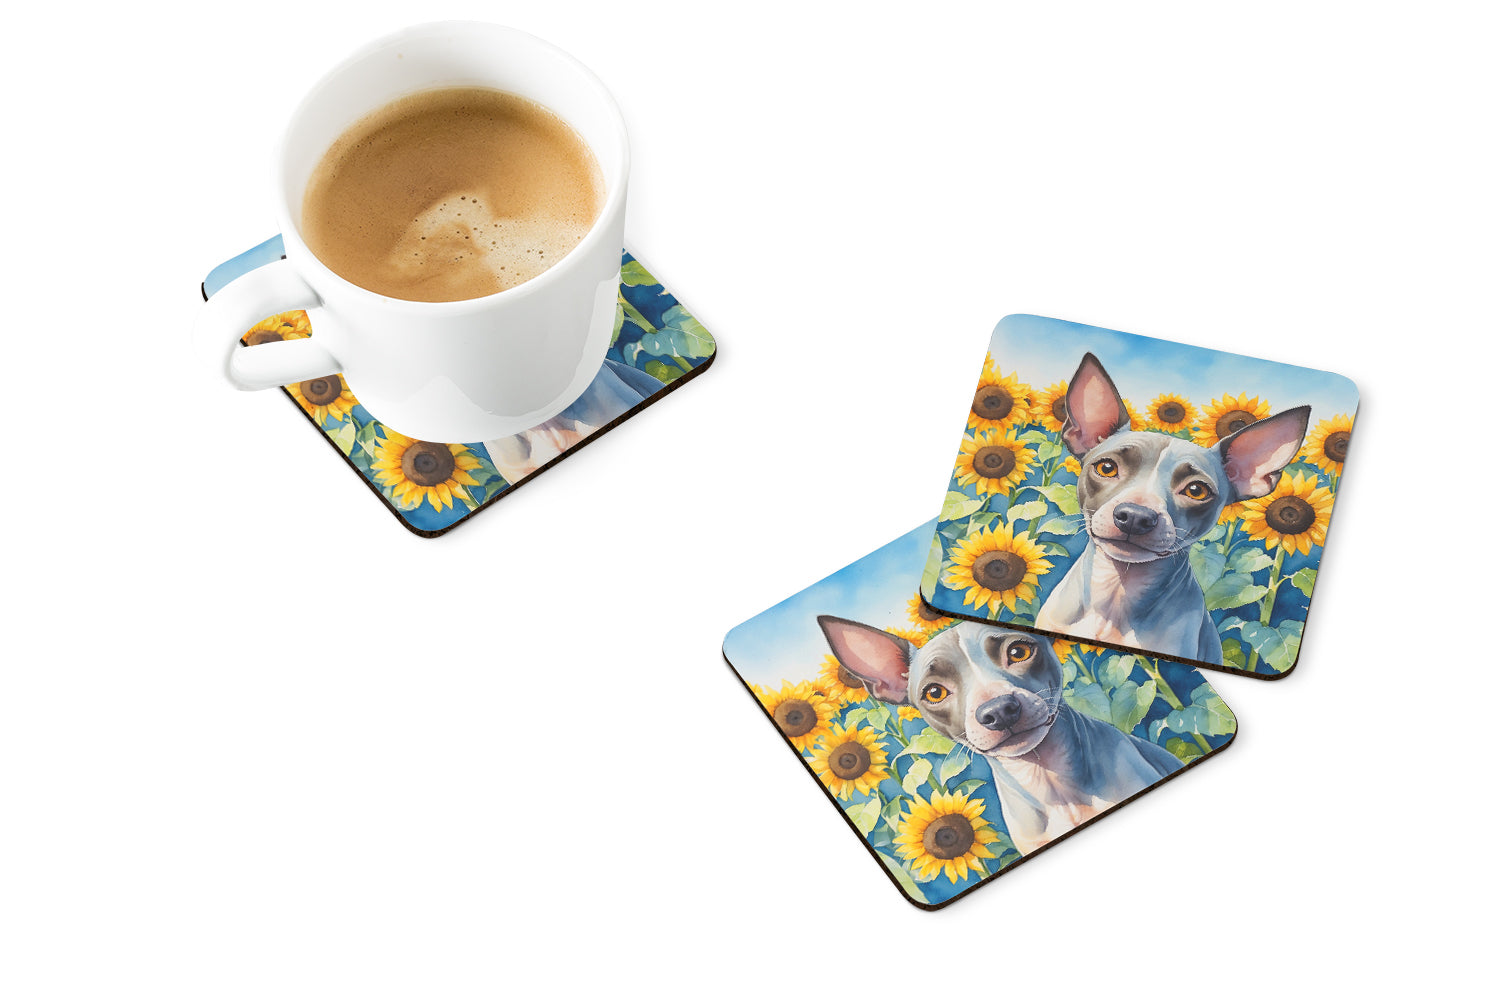 American Hairless Terrier in Sunflowers Foam Coasters